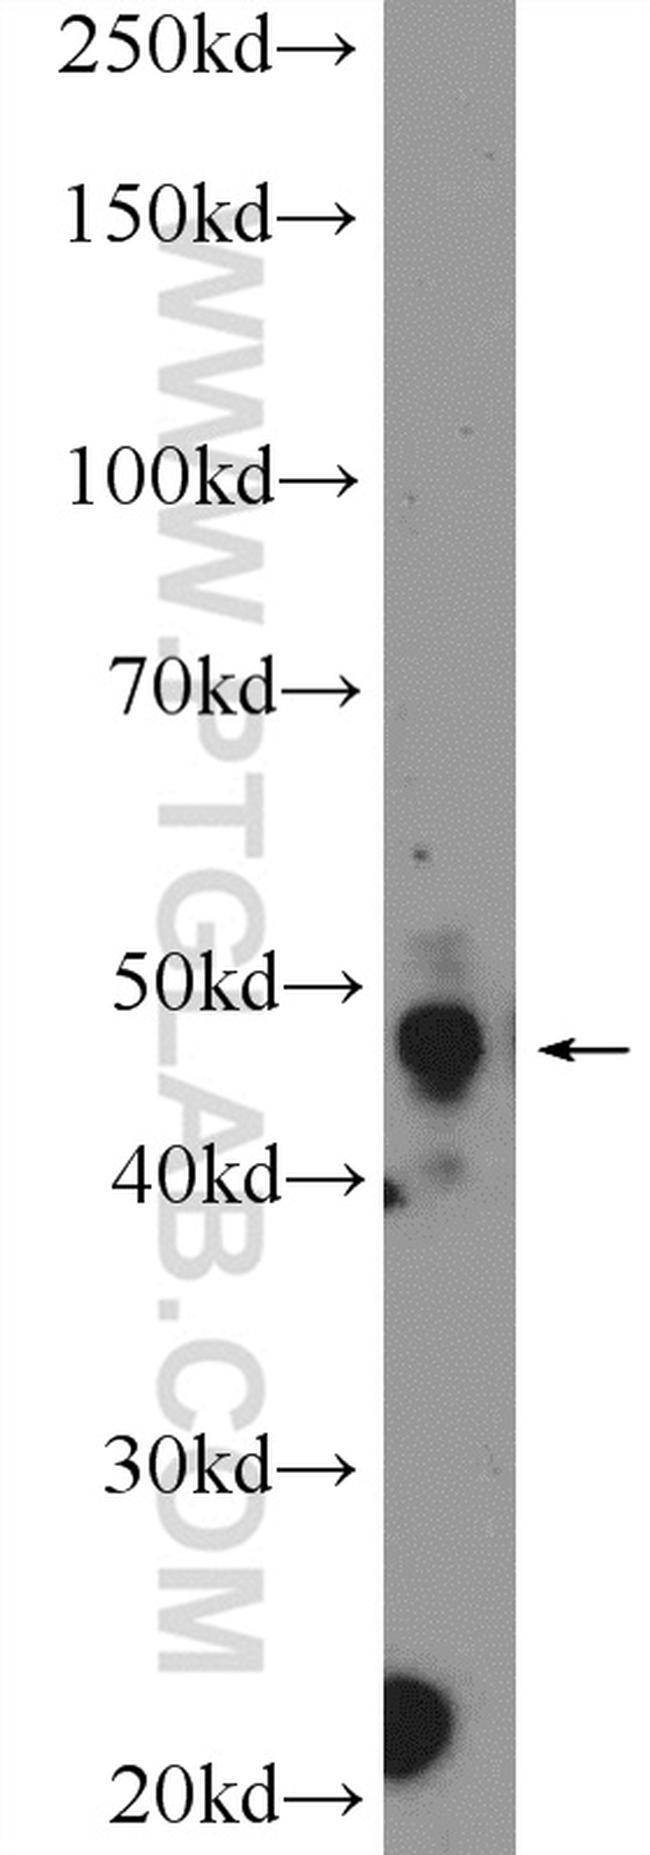 PYGO2 Antibody in Western Blot (WB)